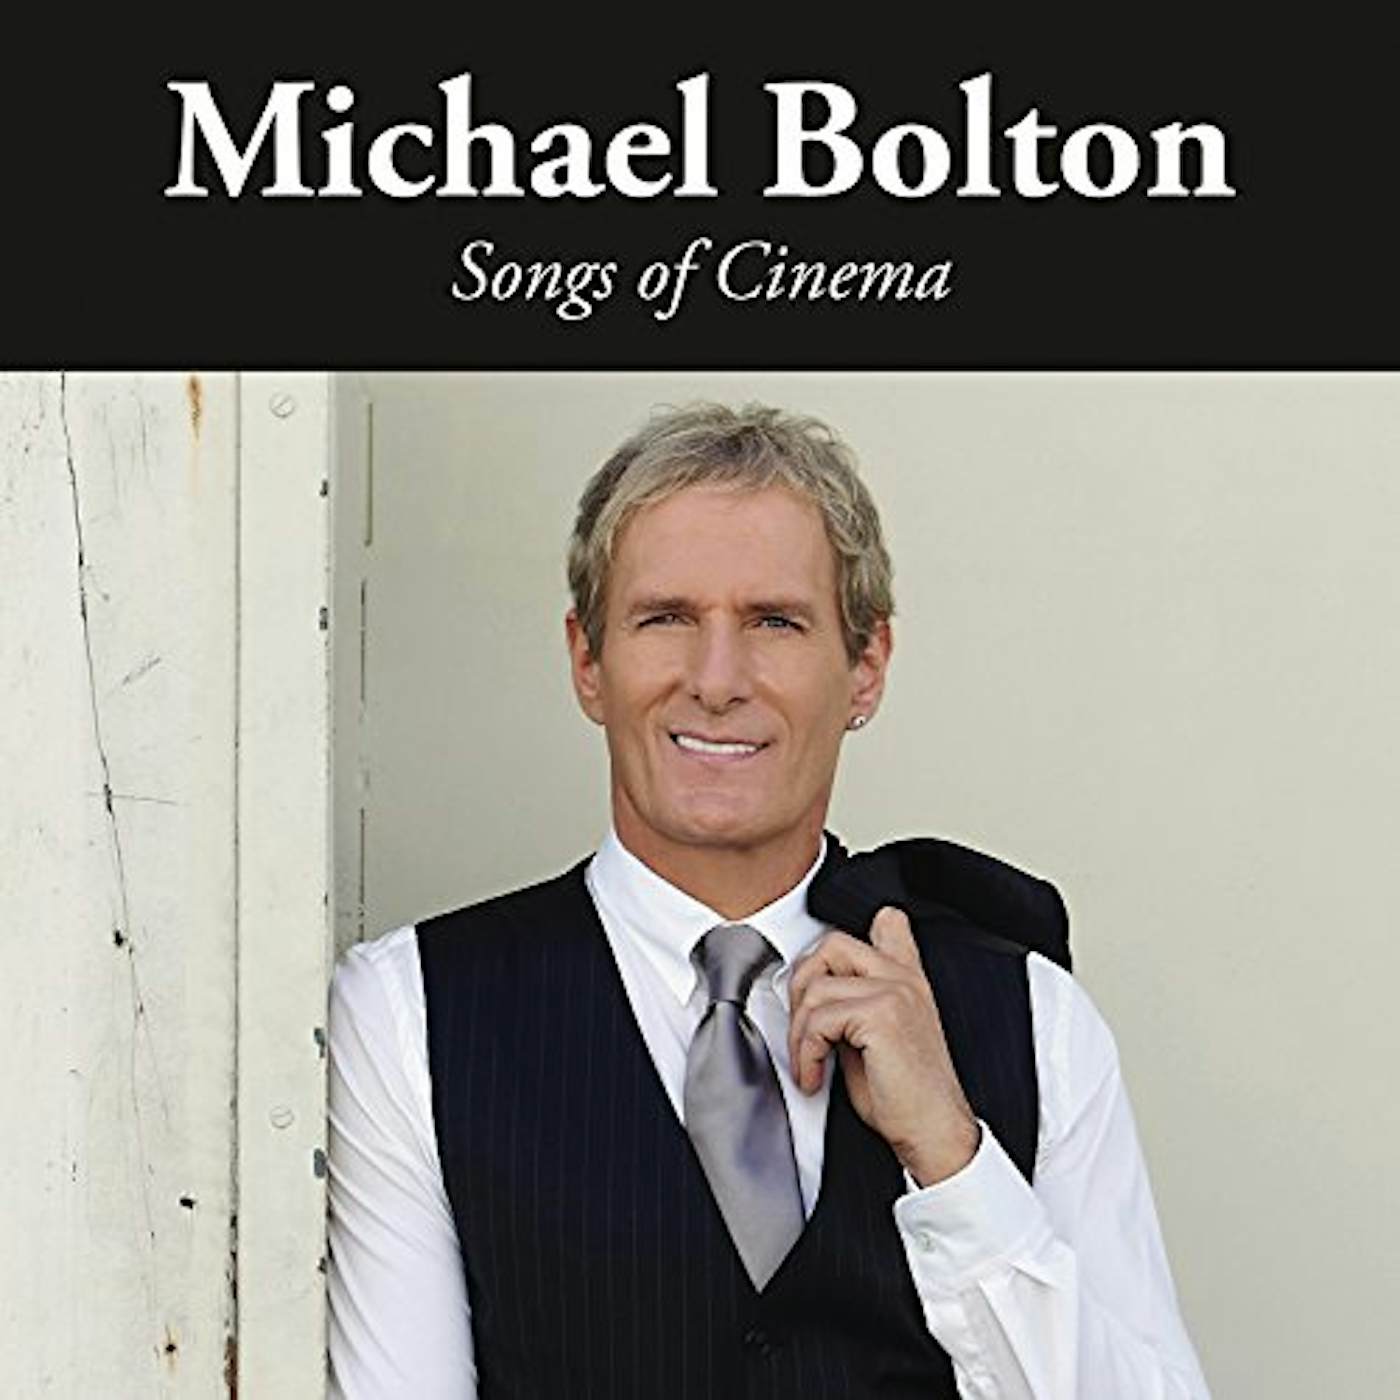 Michael Bolton SONGS OF CINEMA CD